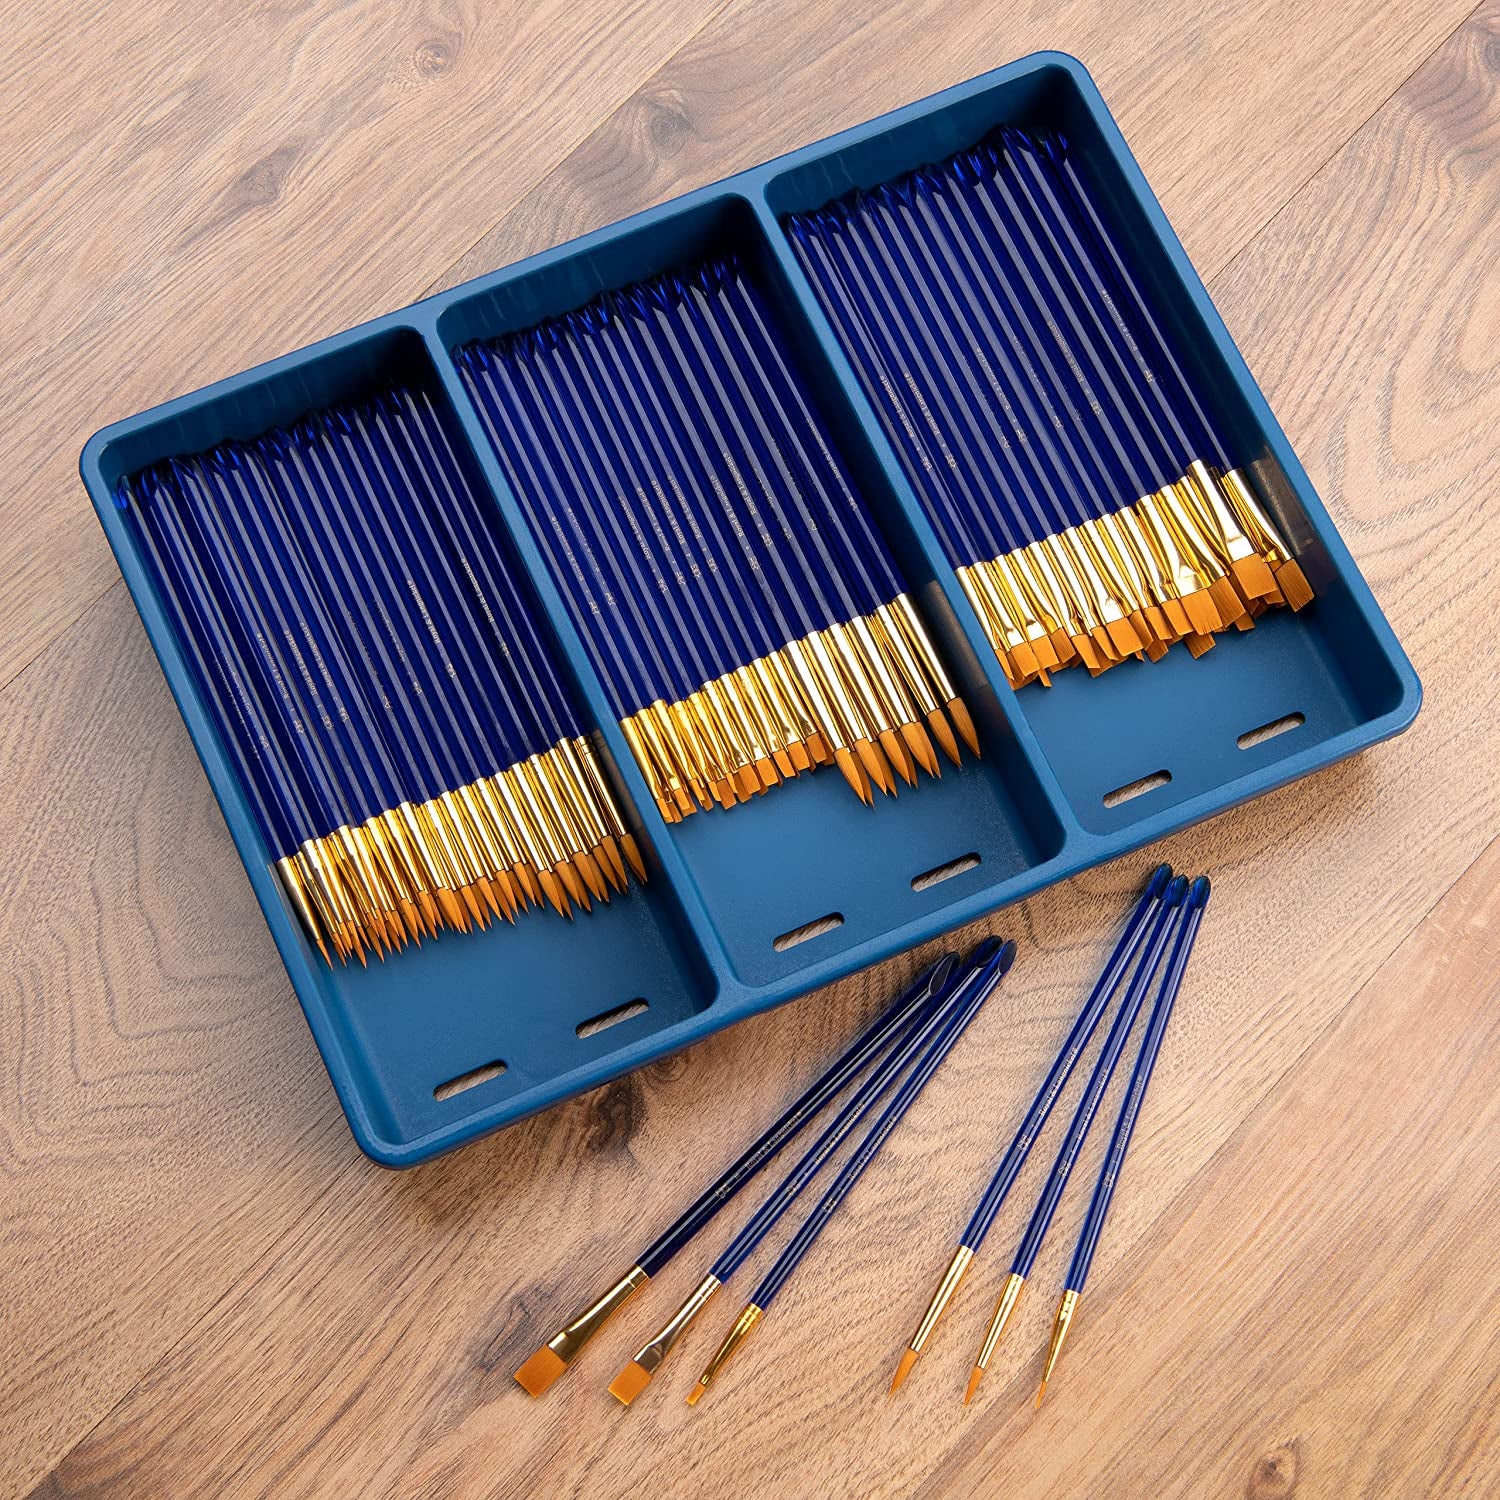 Painting Brush Sets | Crafts Brush Sets | Auxxano305